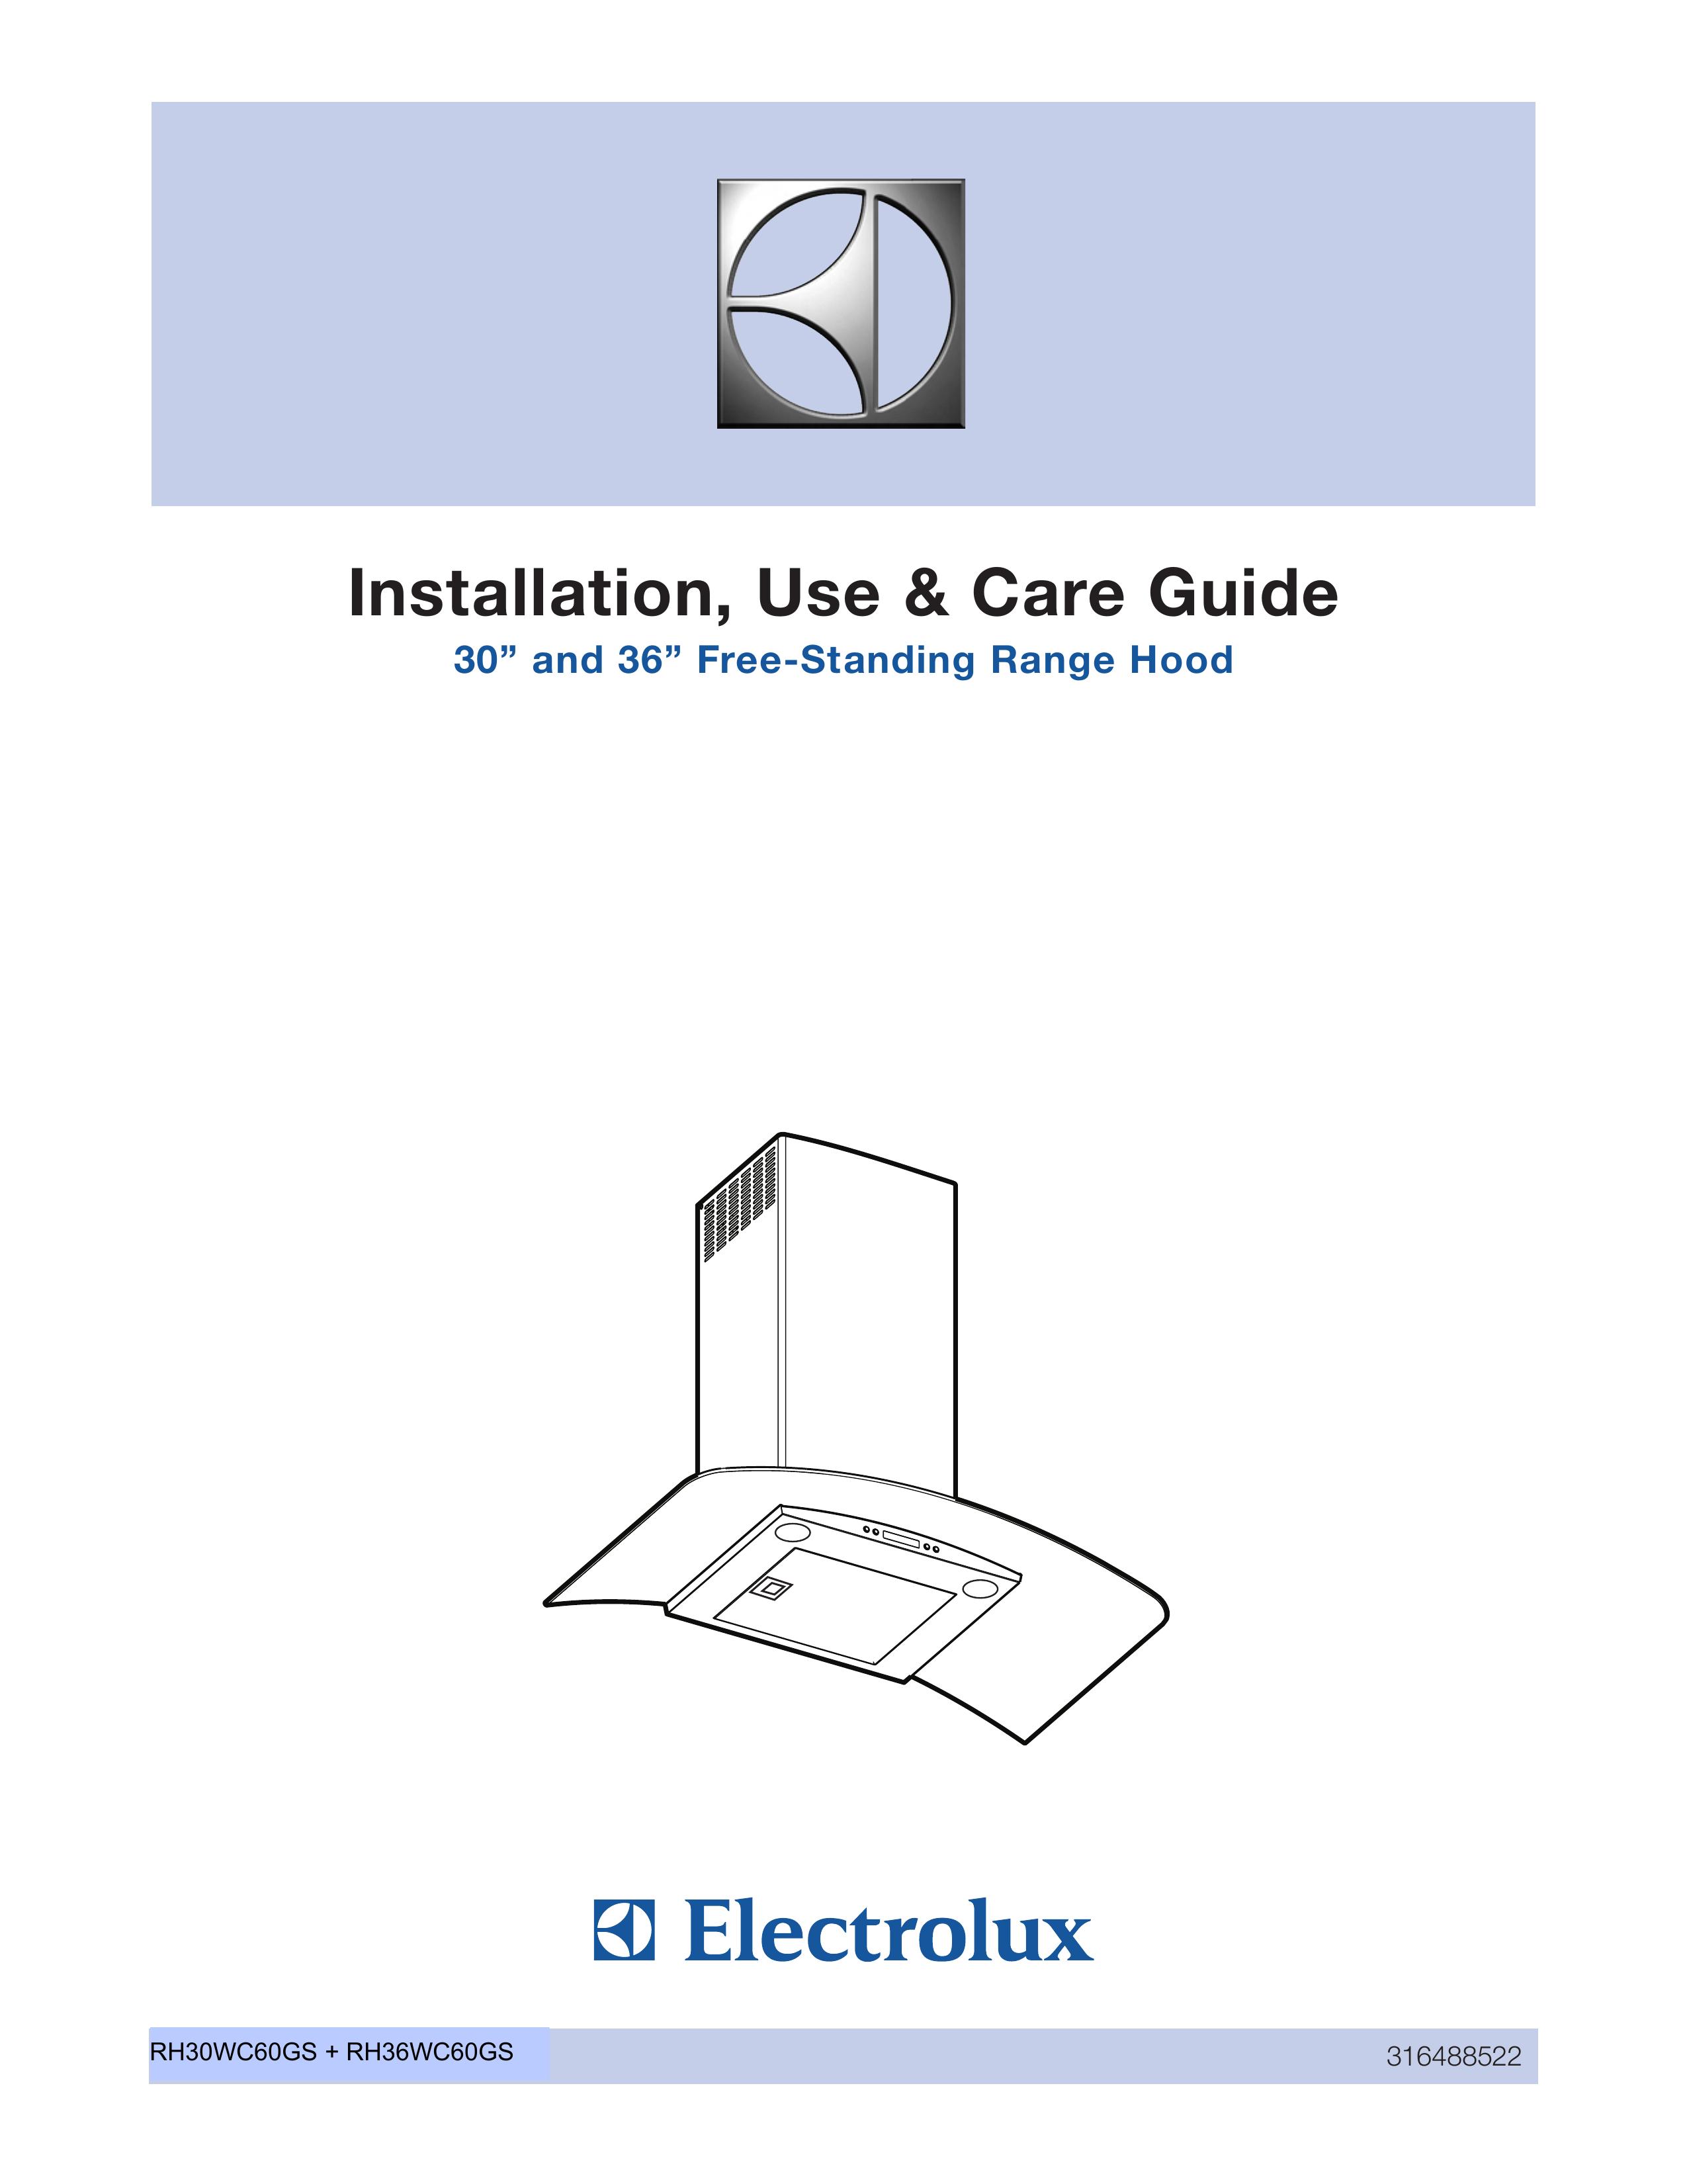 Frigidaire EI30WC60GS Ventilation Hood User Manual